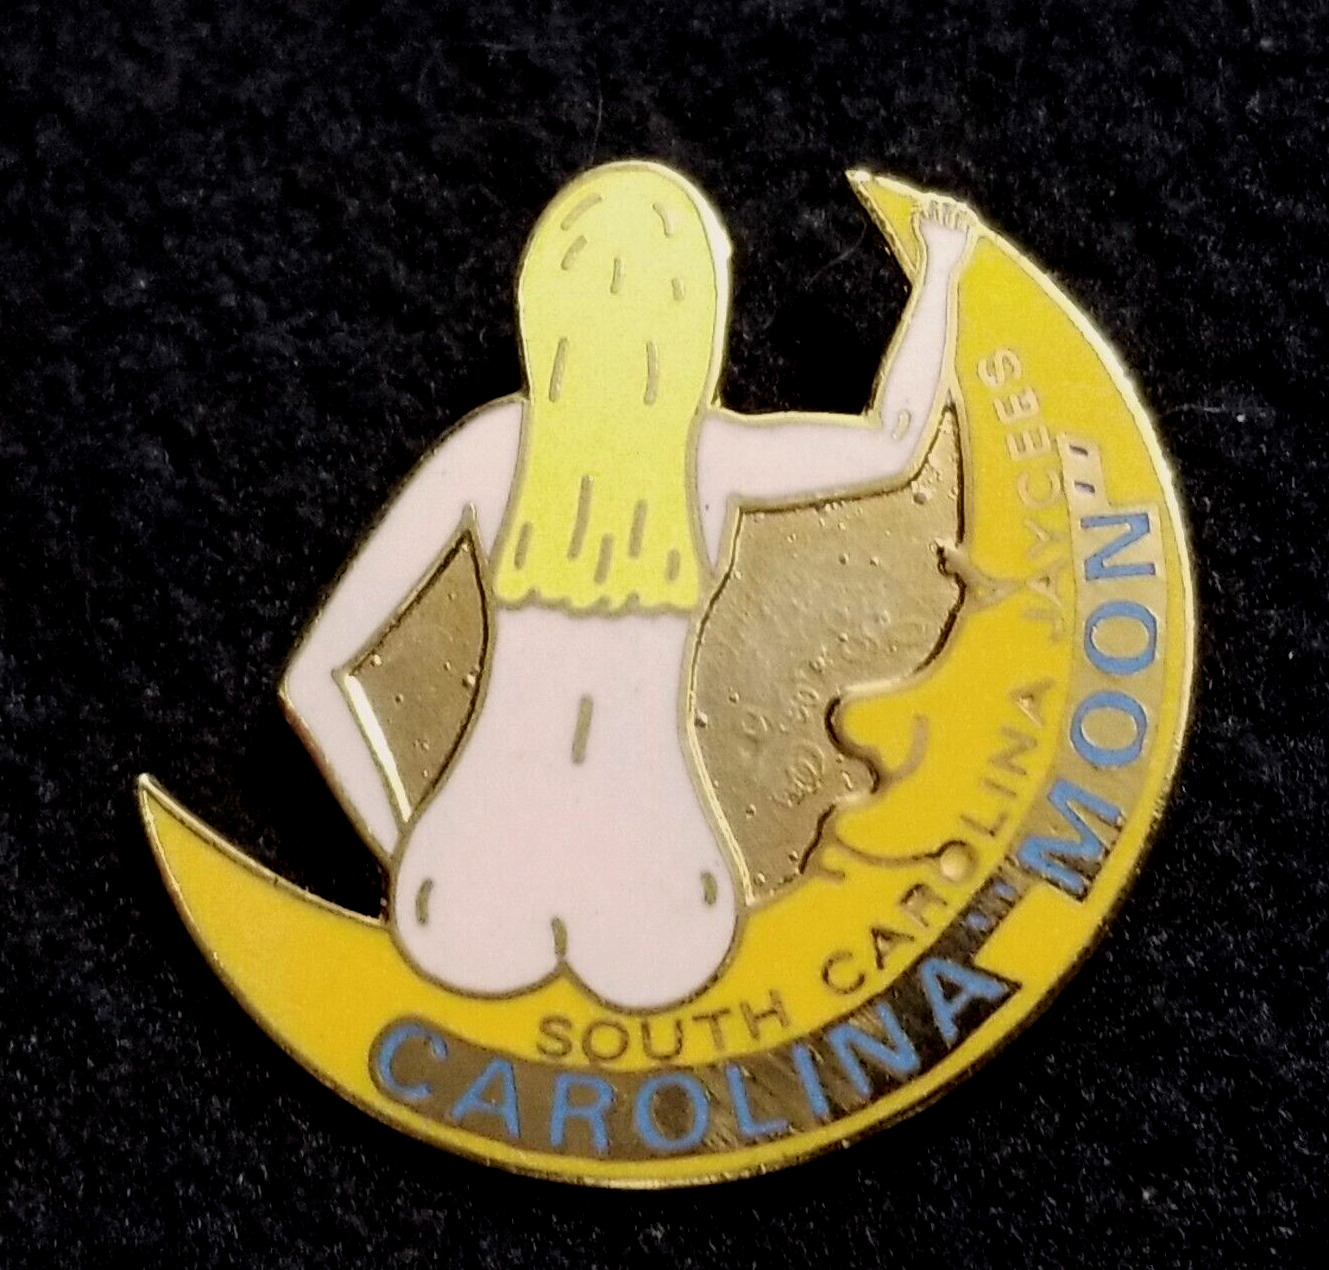 CAROLINA MOON South Carolina Jaycees  Pin Blond Girl Cheeks on Moon Collectible